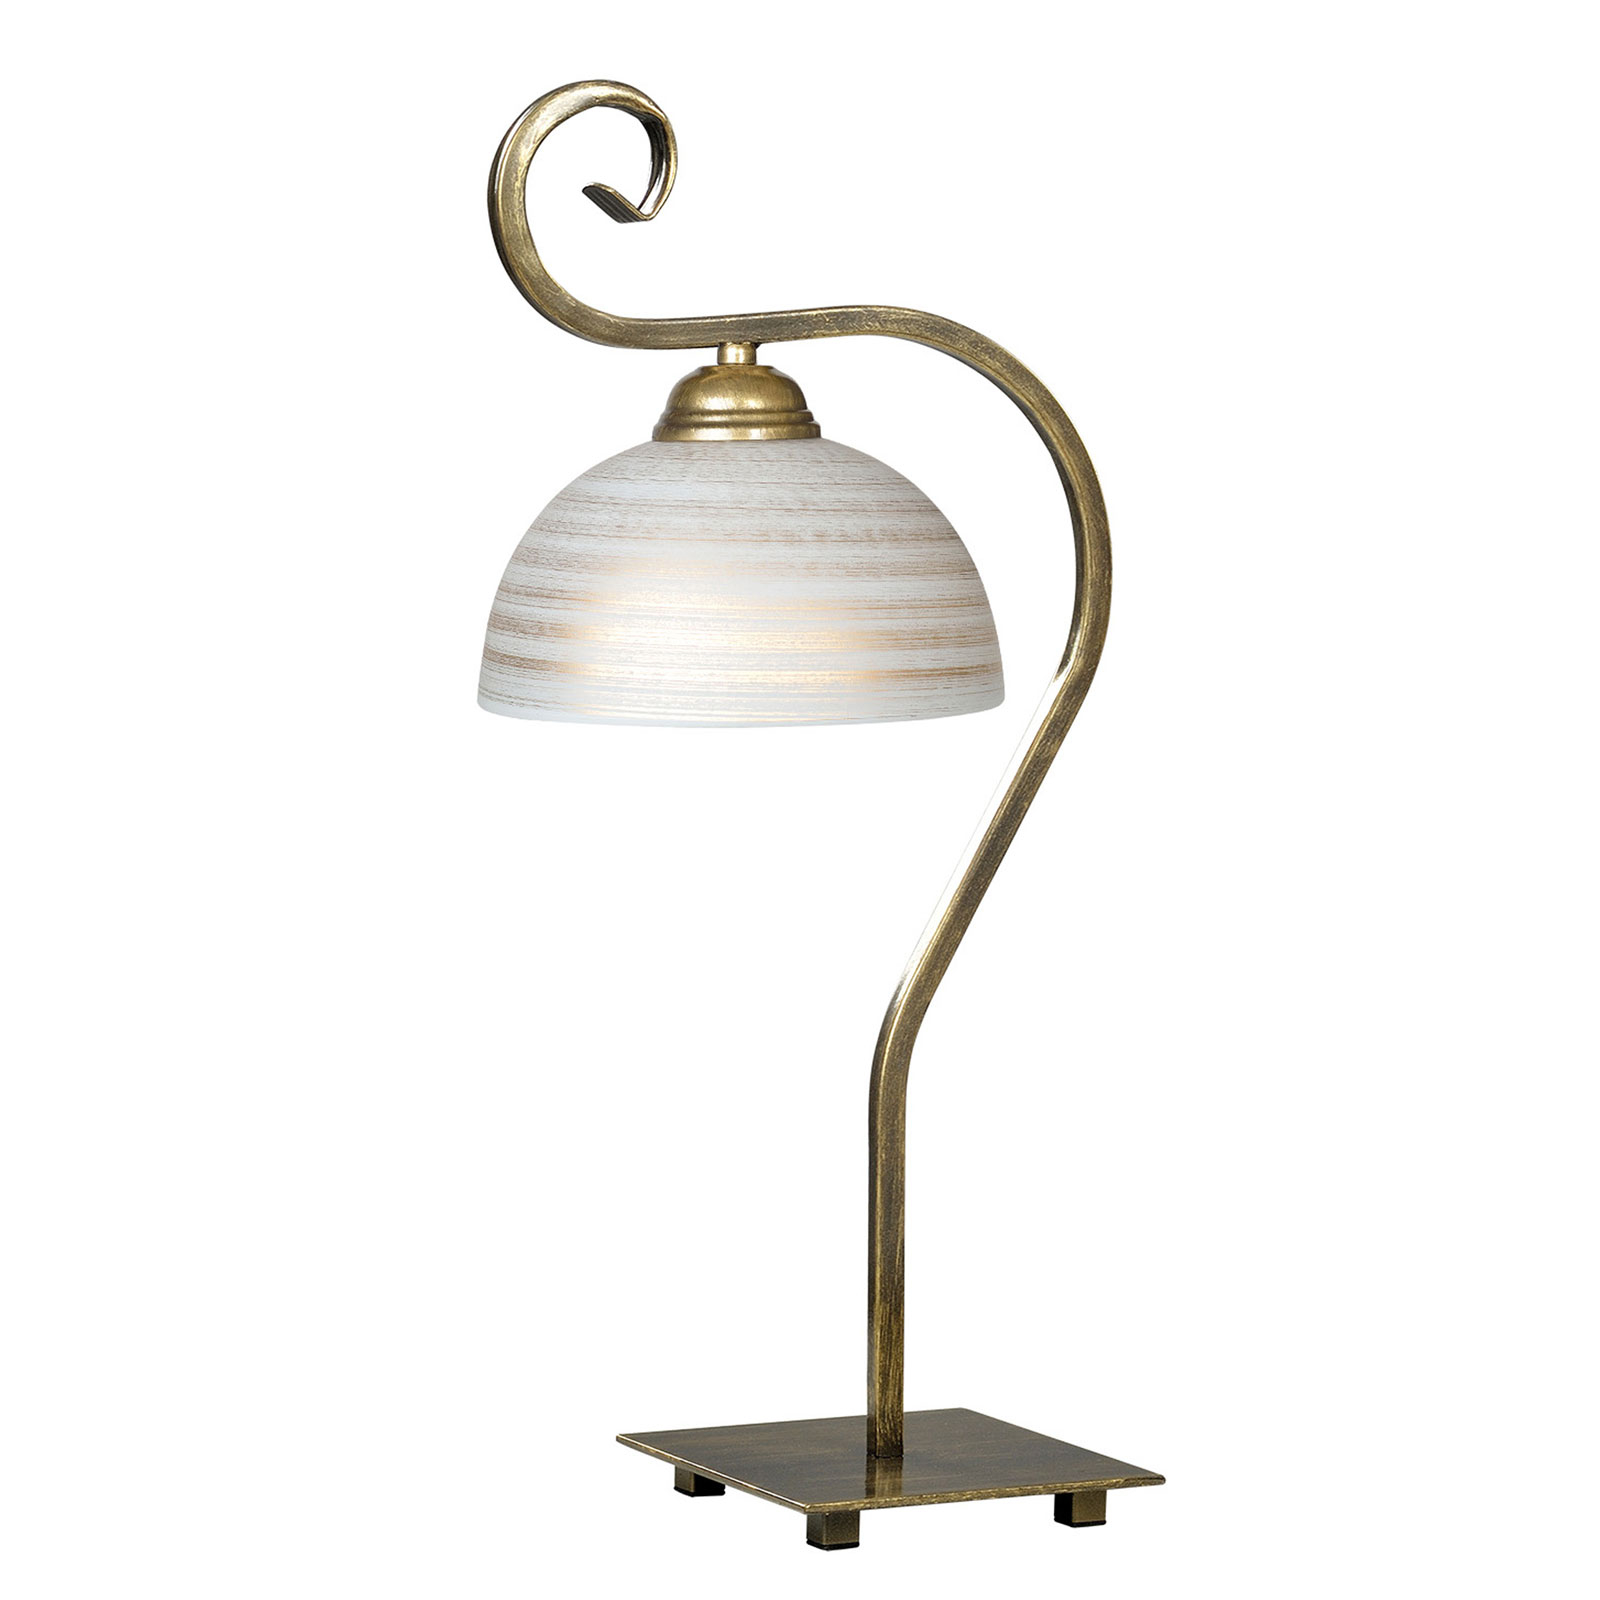 Wivara LN1 table lamp in a classic design, gold